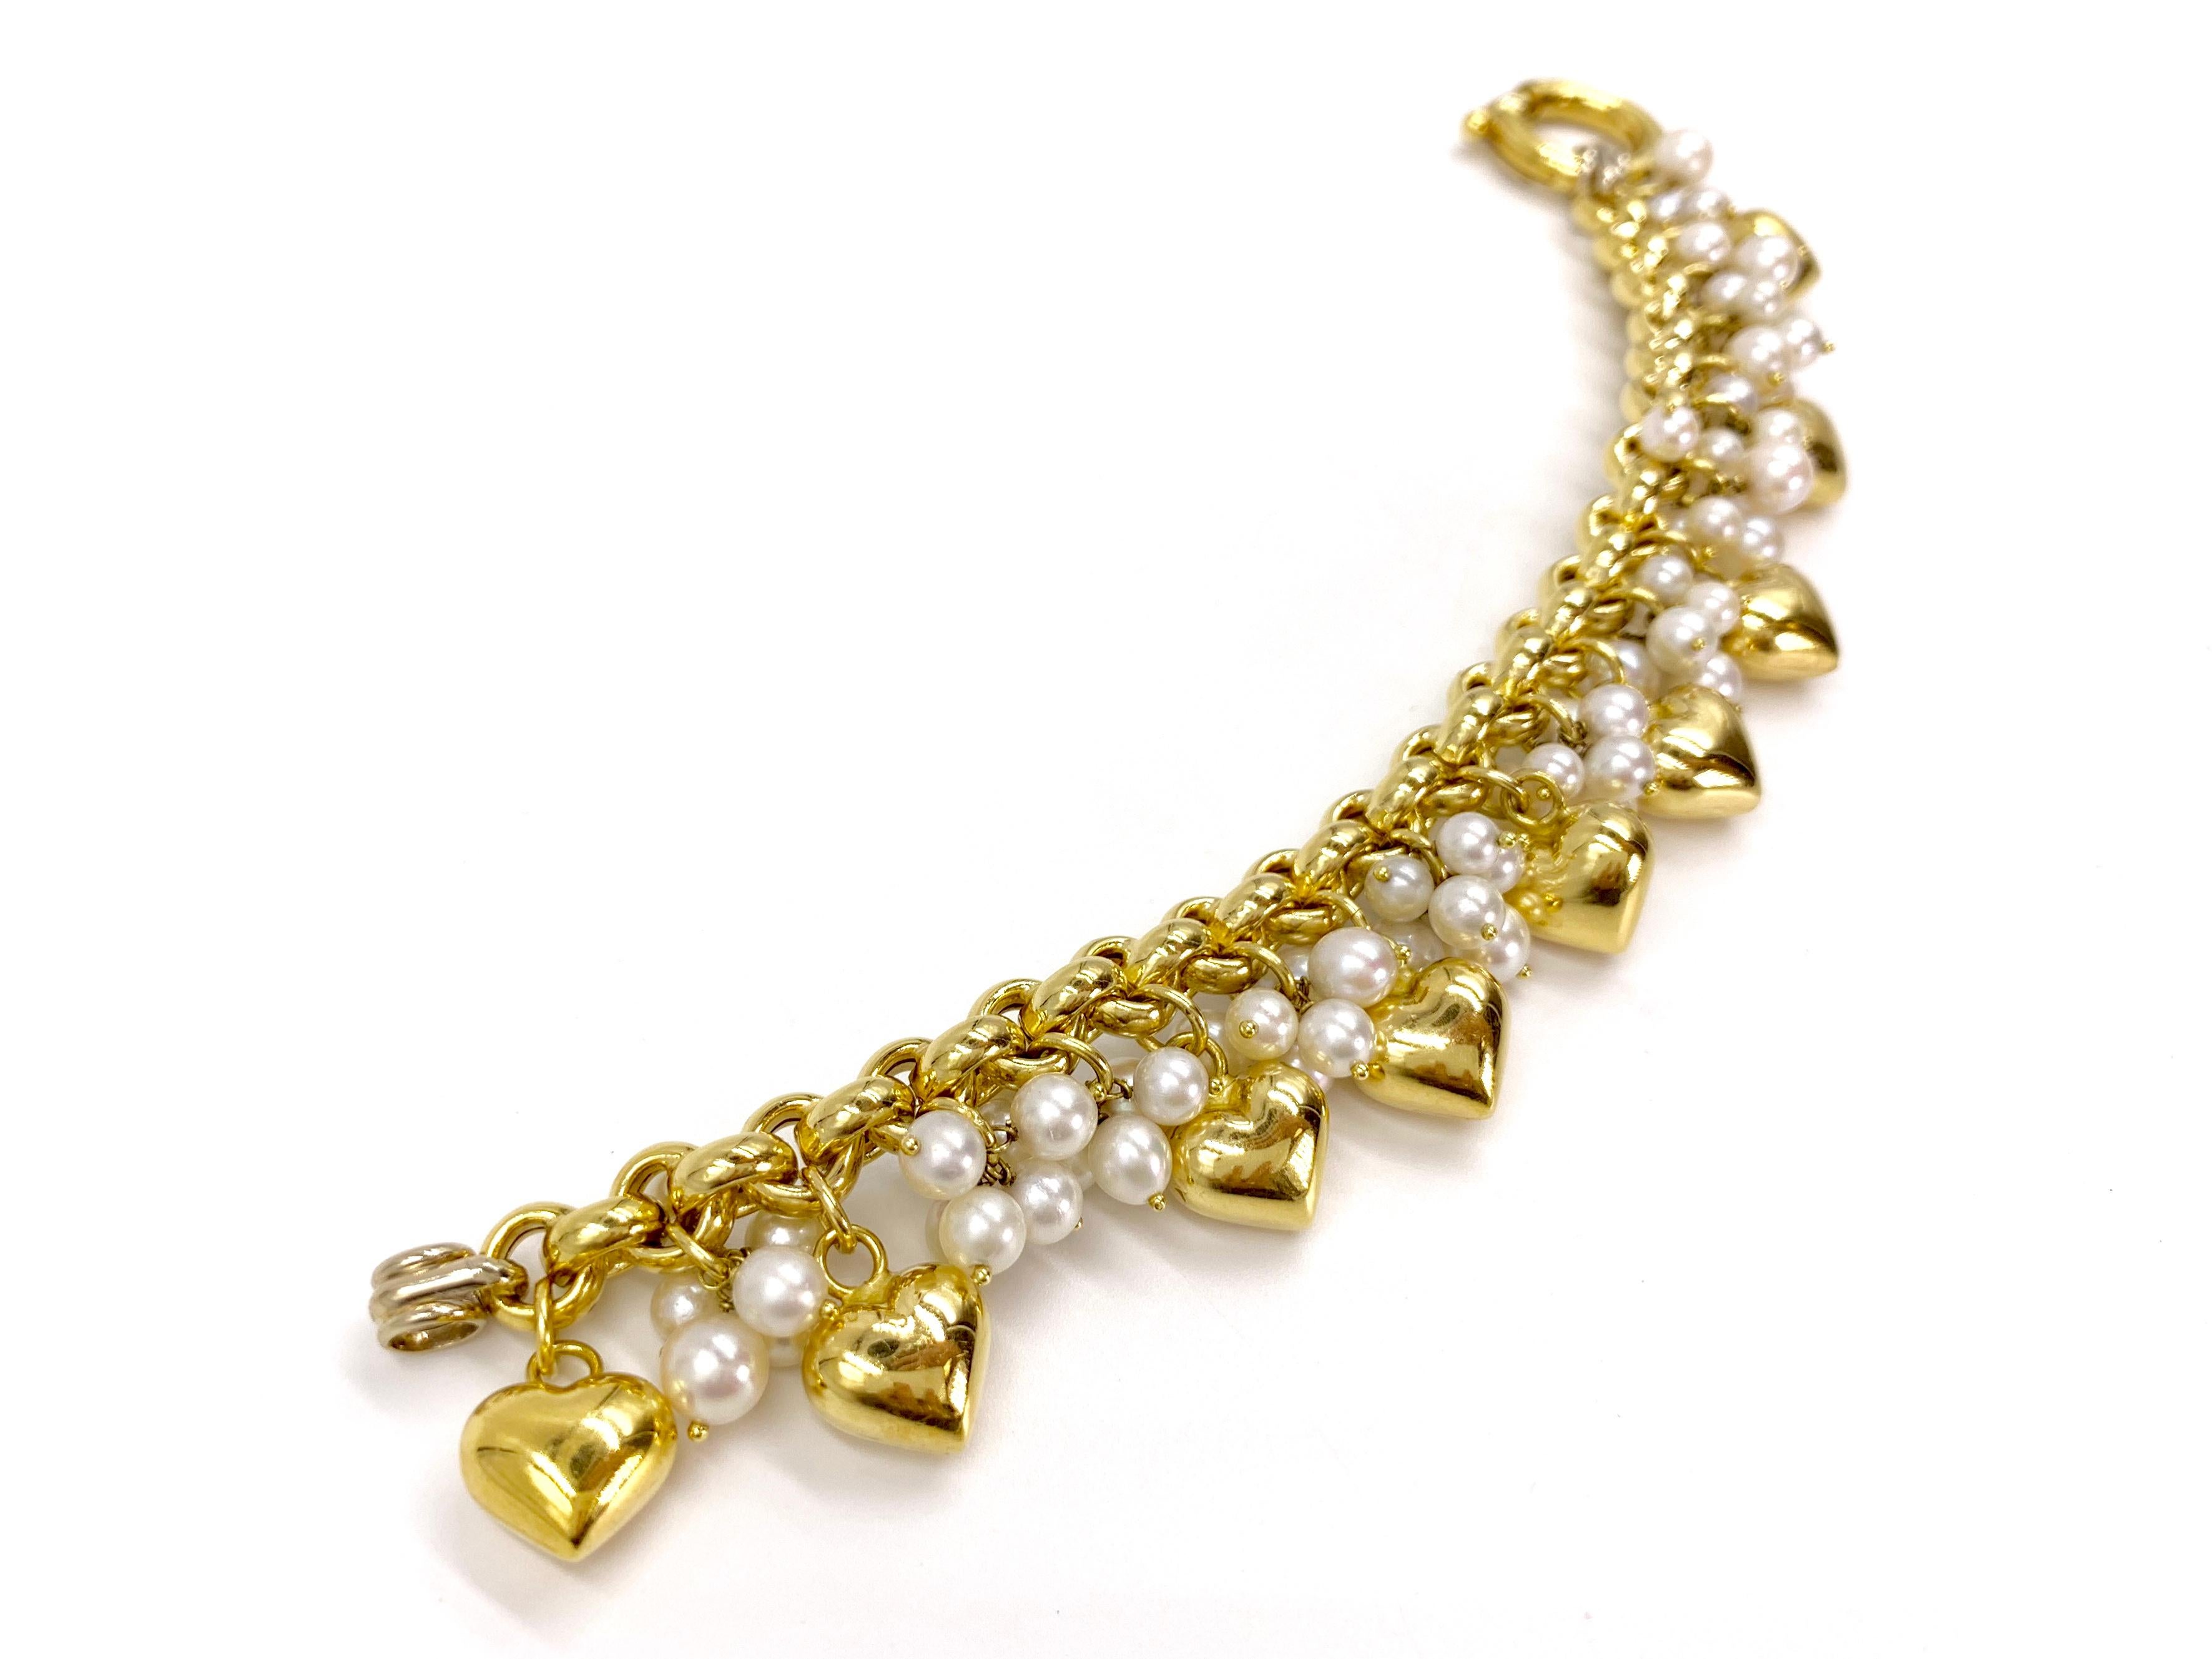 Women's 18 Karat Cultured Pearl and Puffed Heart Charm Style Bracelet